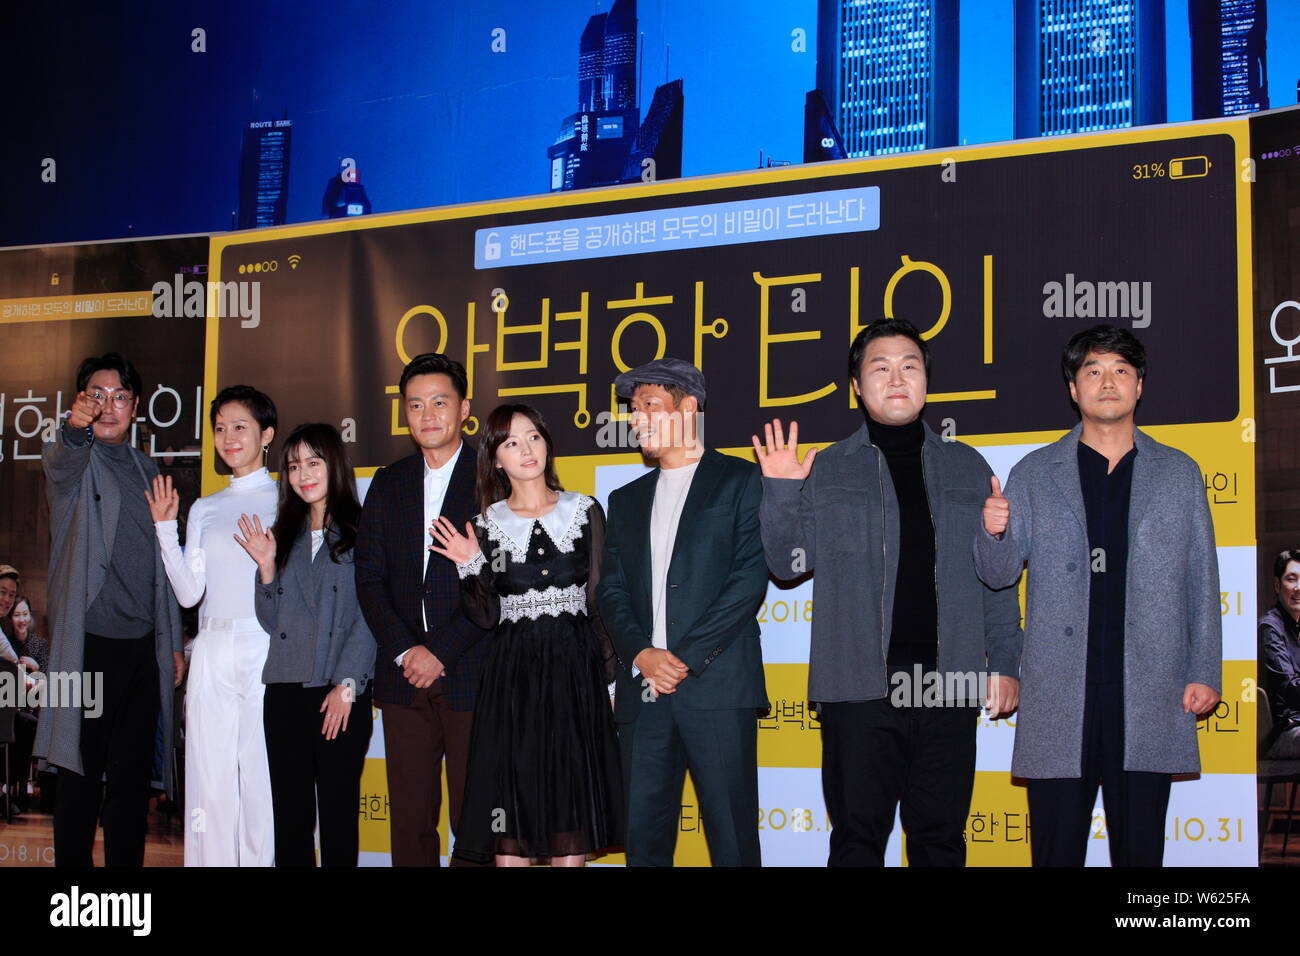 (From left) South Korean actor Cho Jin-woong, actresses Yum Jung-ah, Ji Woo, Lee Seo-jin, actress Song Ha-yoon, actors Yoo Hae-jin, Yoon Kyung-ho, and Stock Photo